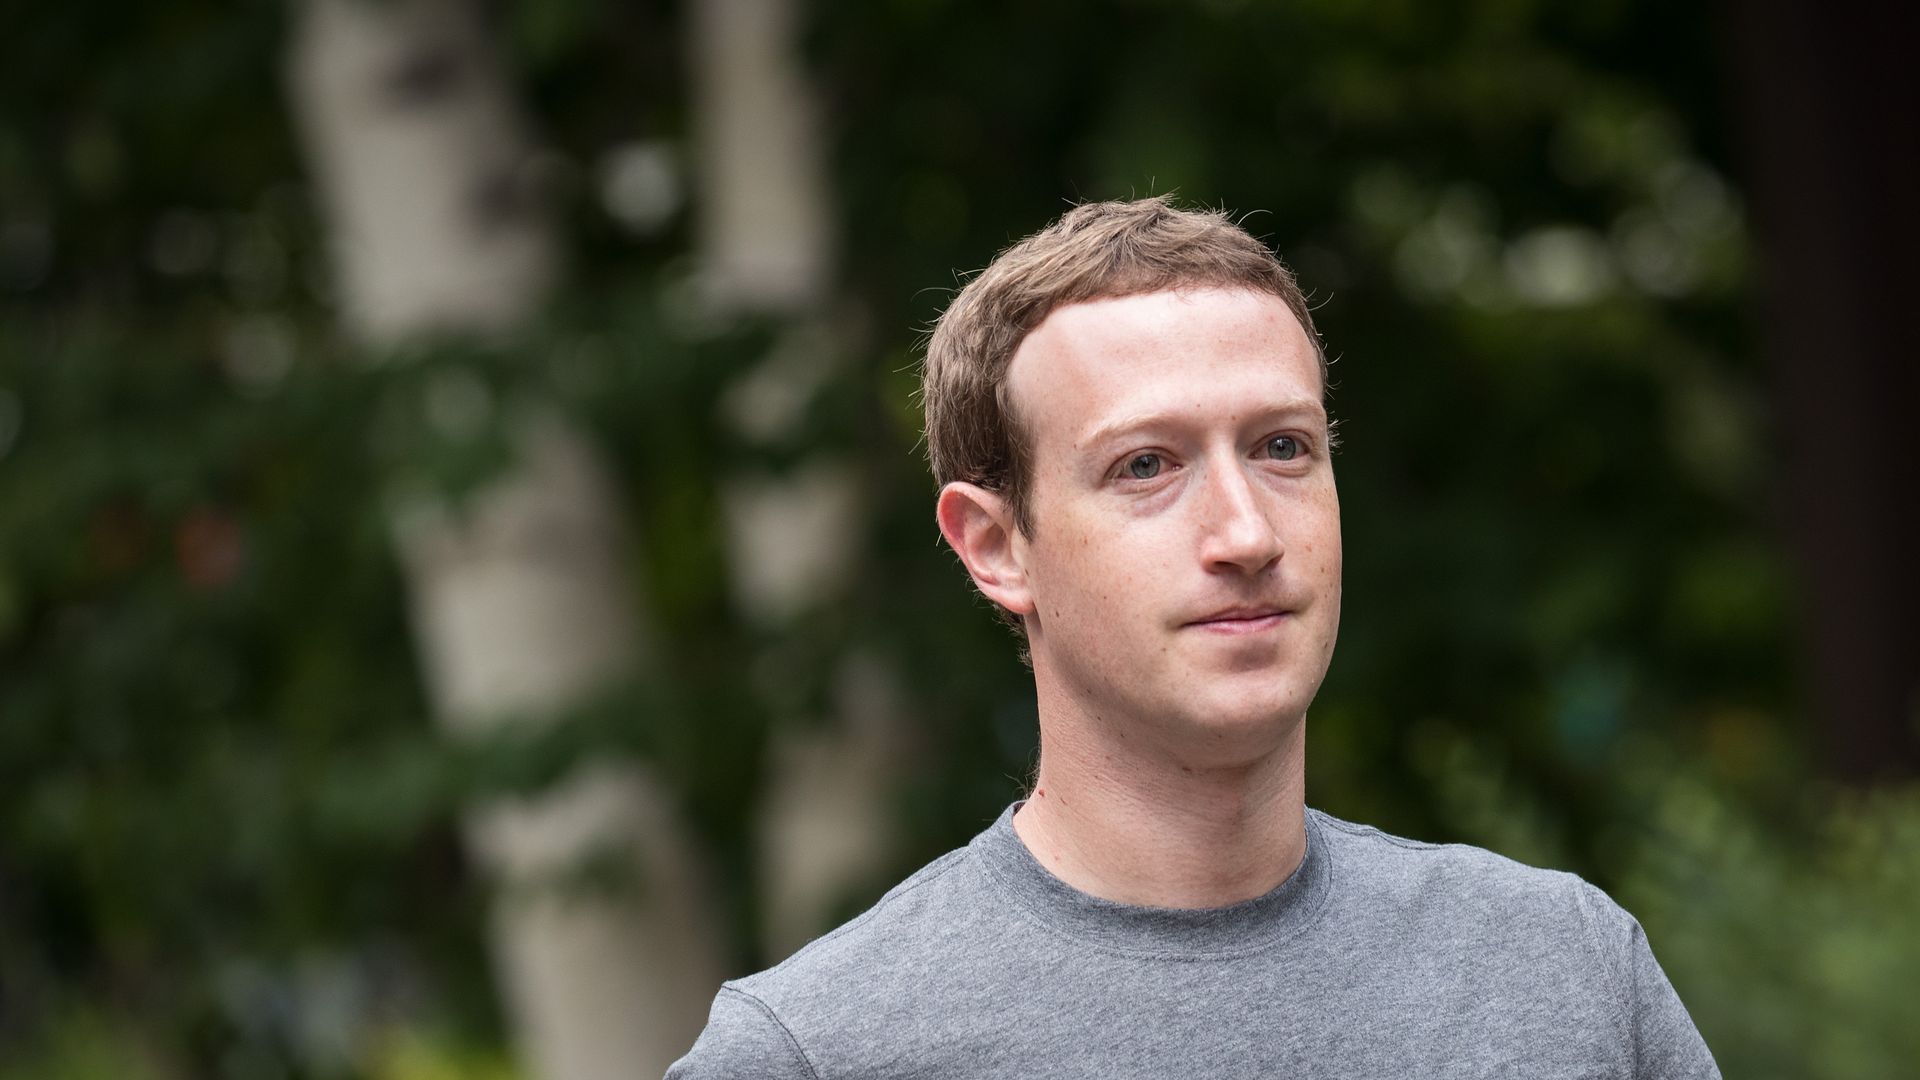 Mark Zuckerberg walks in front of trees